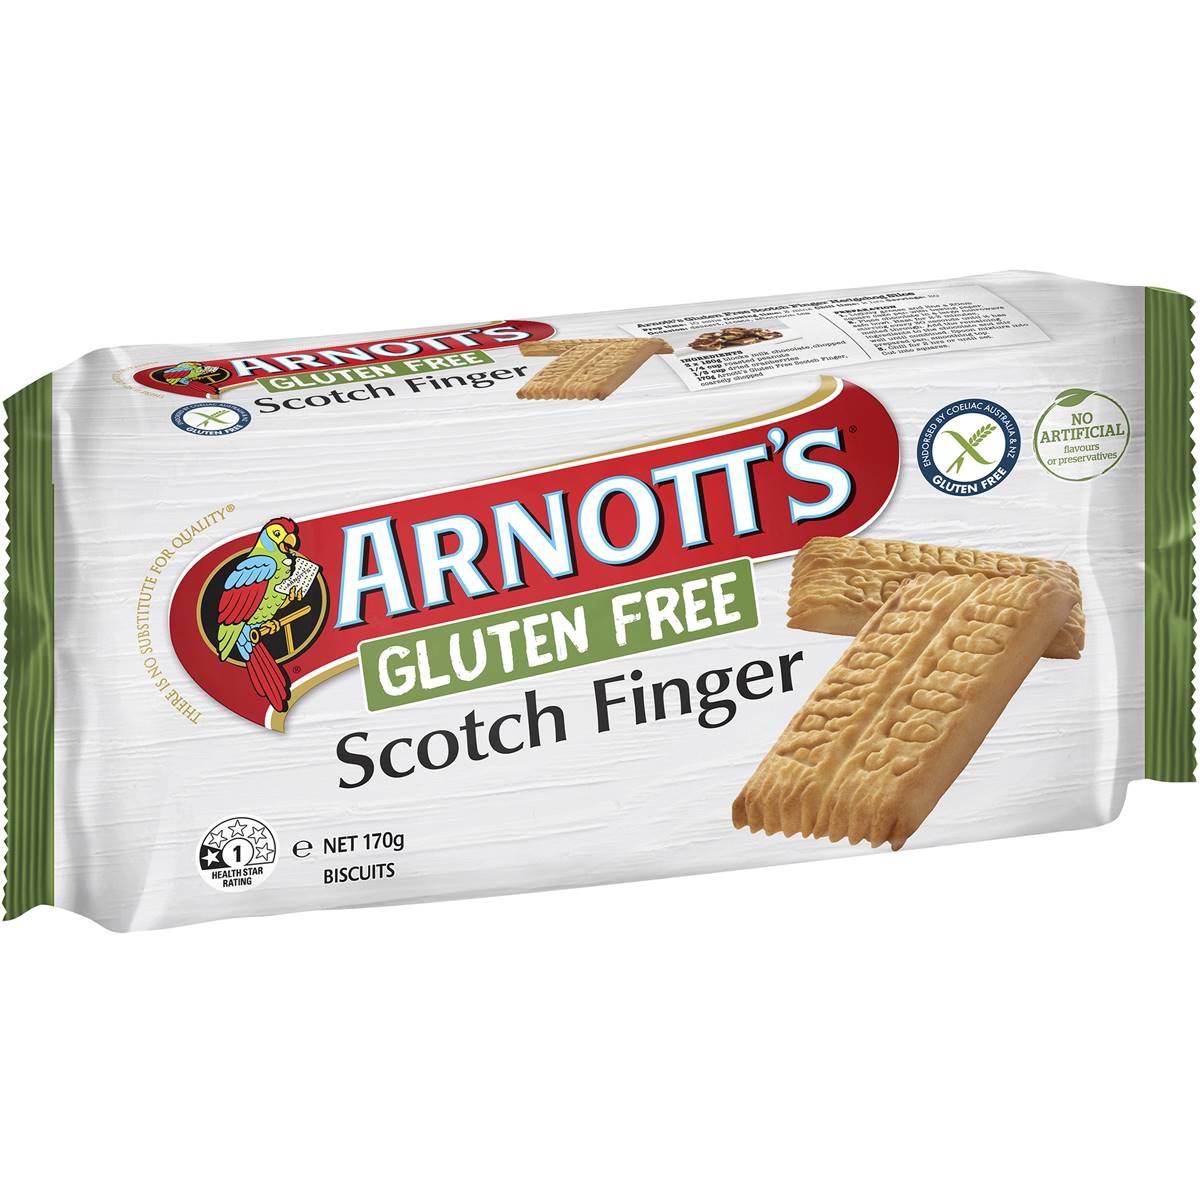 Arnotts Gluten Free Scotch Finger 170g